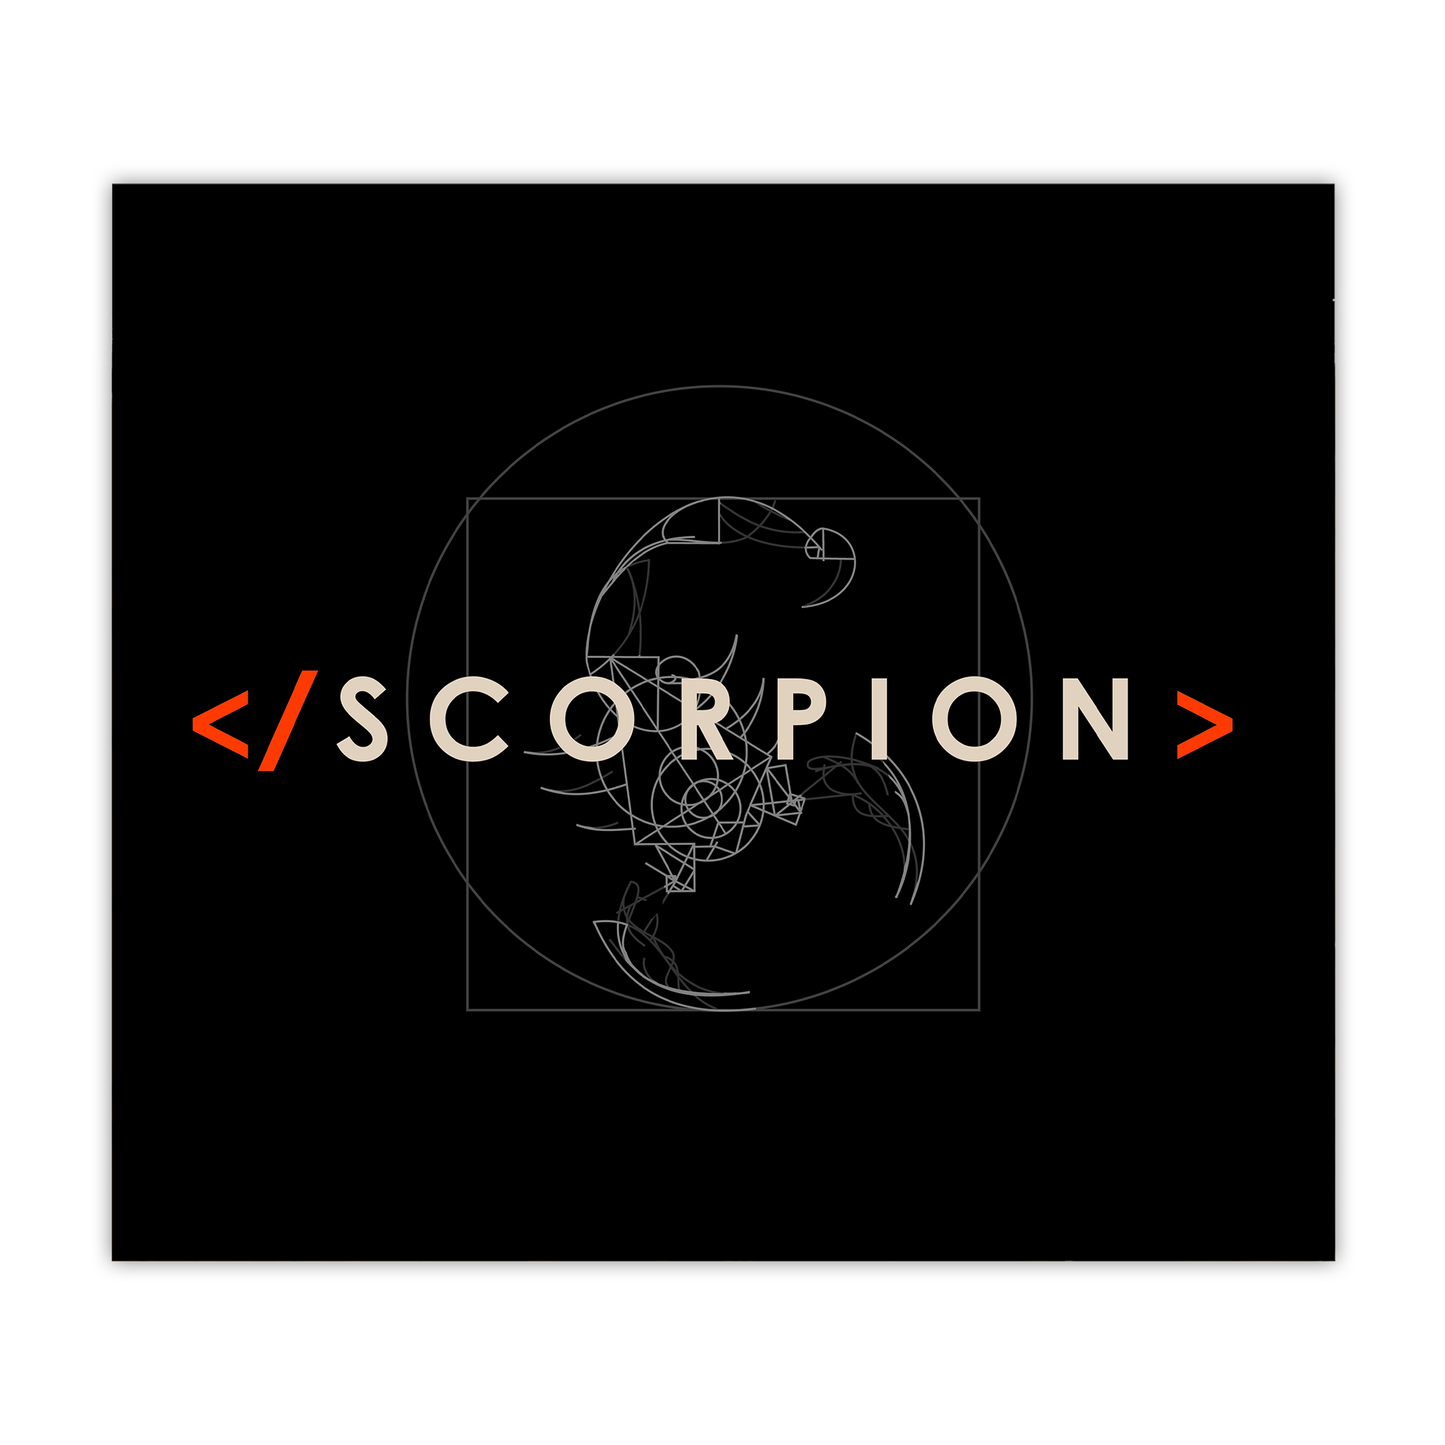 </SCORPION> Scorpion TV Show 20oz Sublimated Metal Tumbler